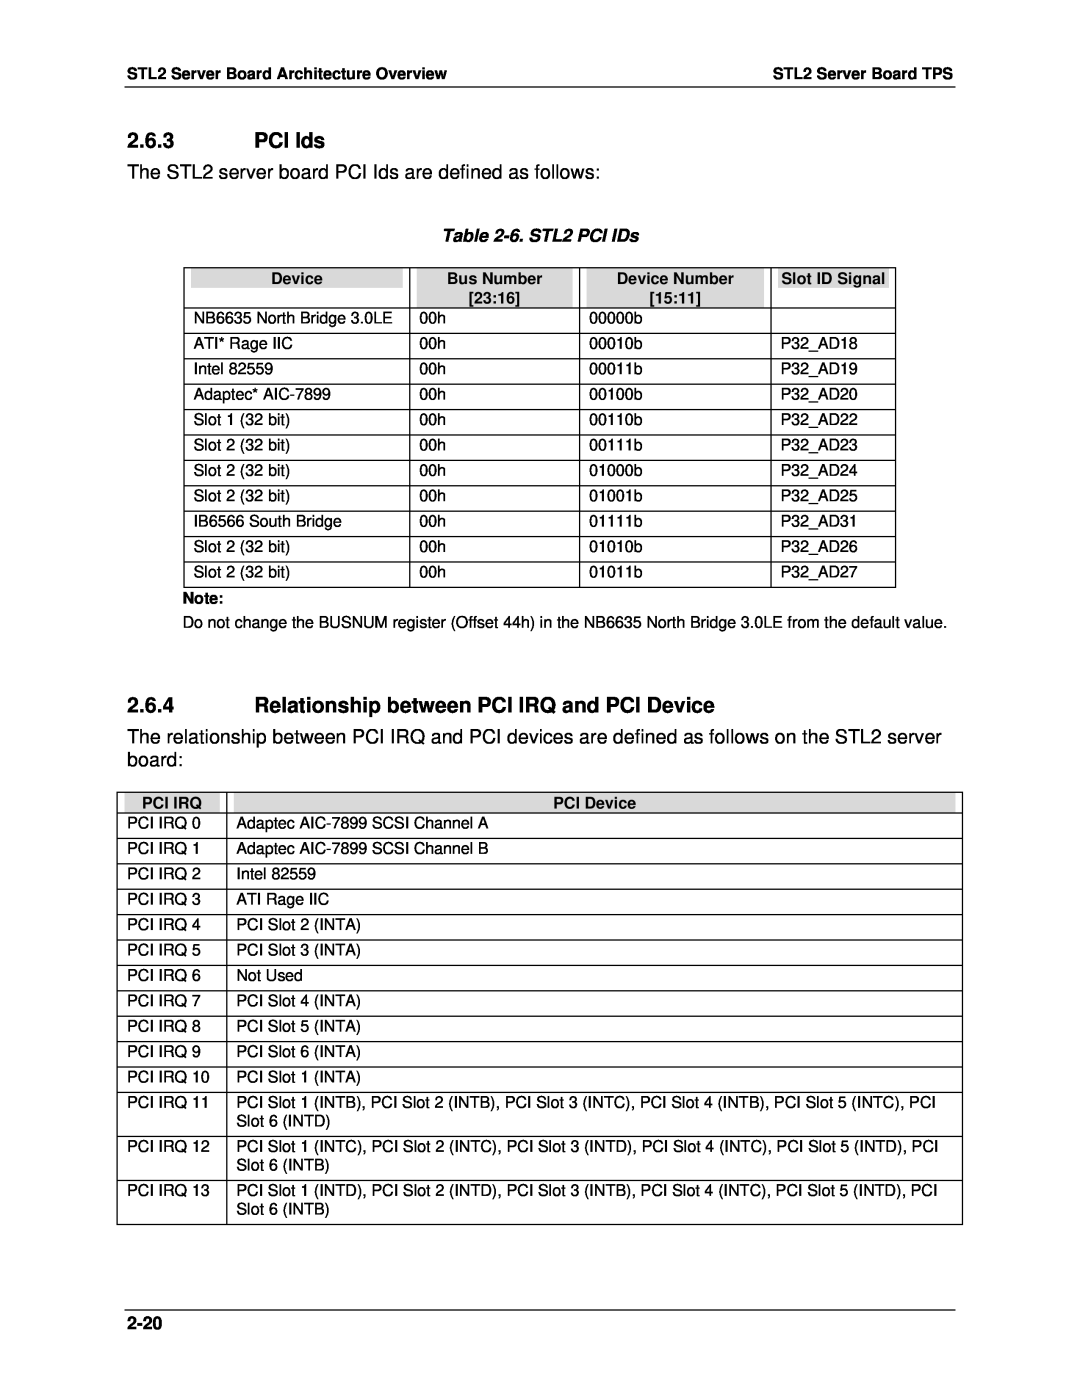 Intel manual 2.6.3PCI Ids, 2.6.4Relationship between PCI IRQ and PCI Device, 6.STL2 PCI IDs 